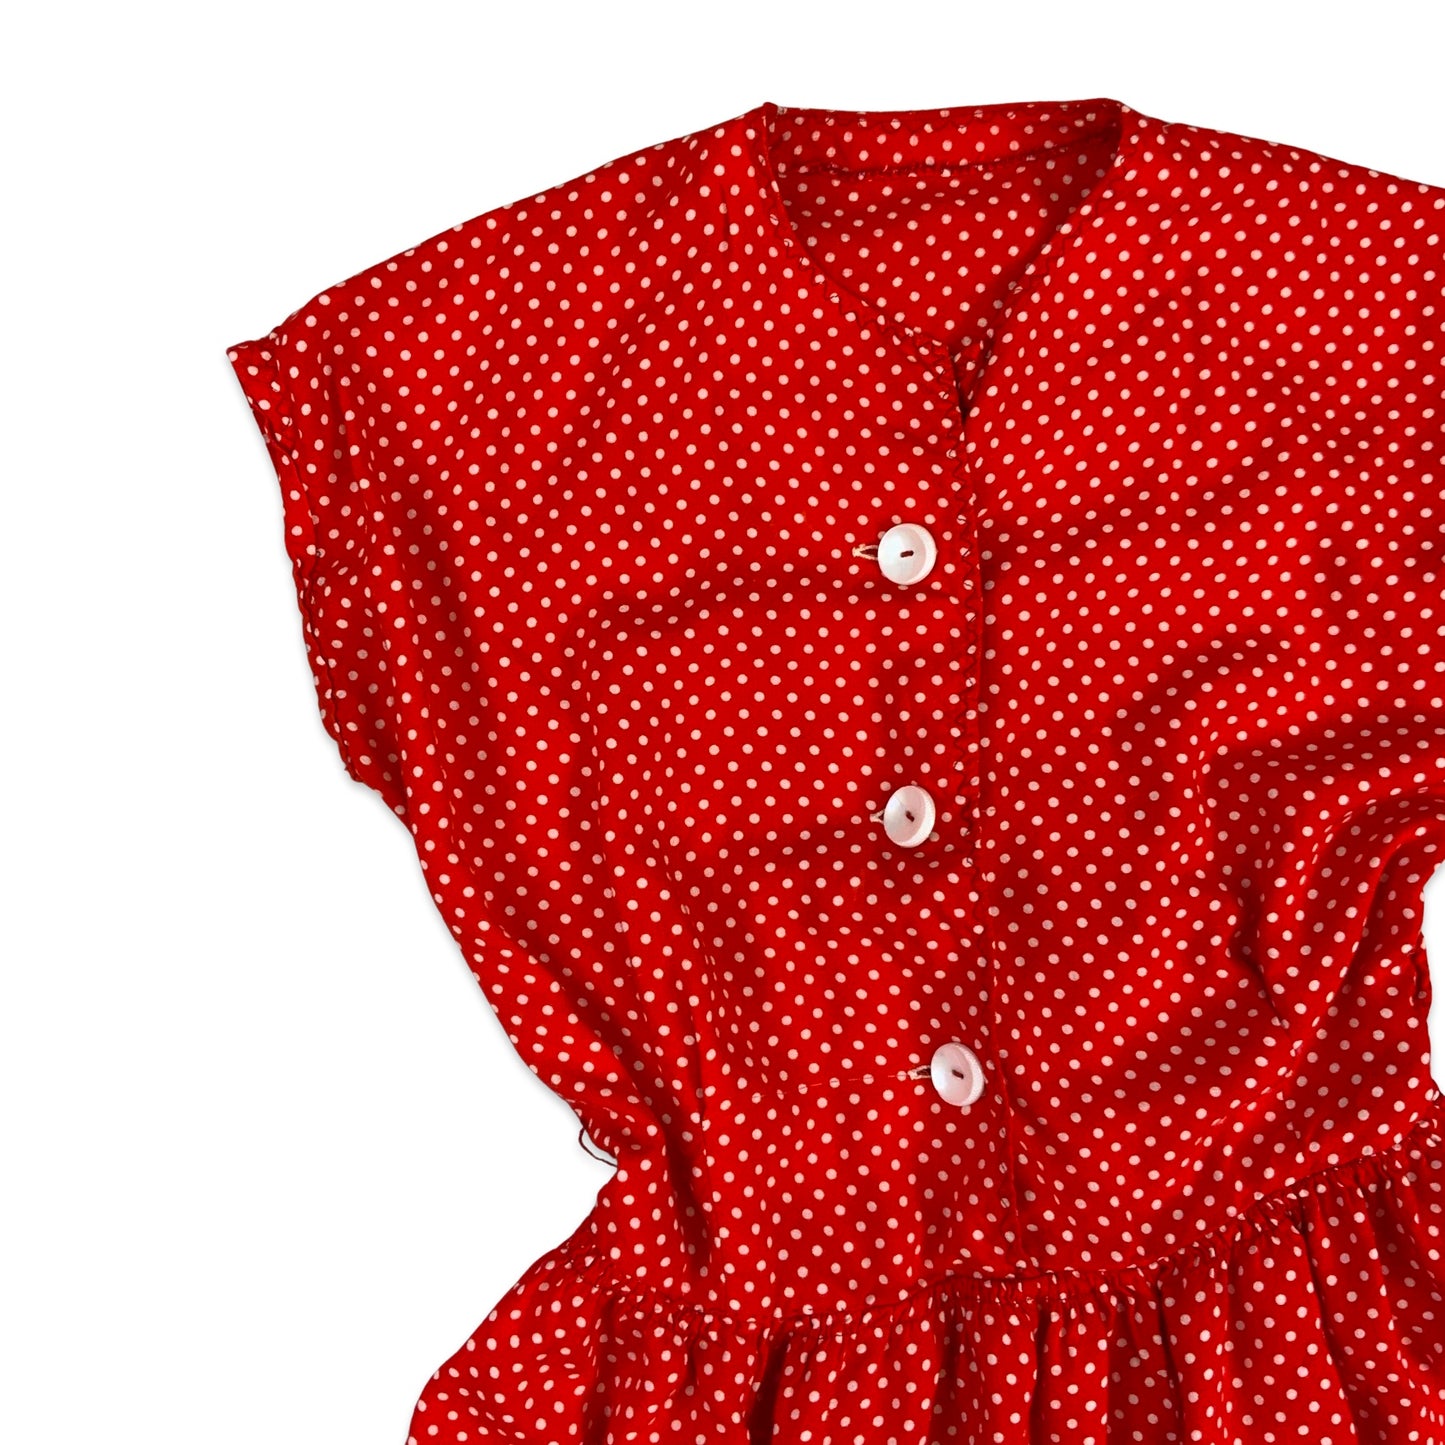 Vintage 70s 80s Bright Red Polka Dot Mini Dress 8 10